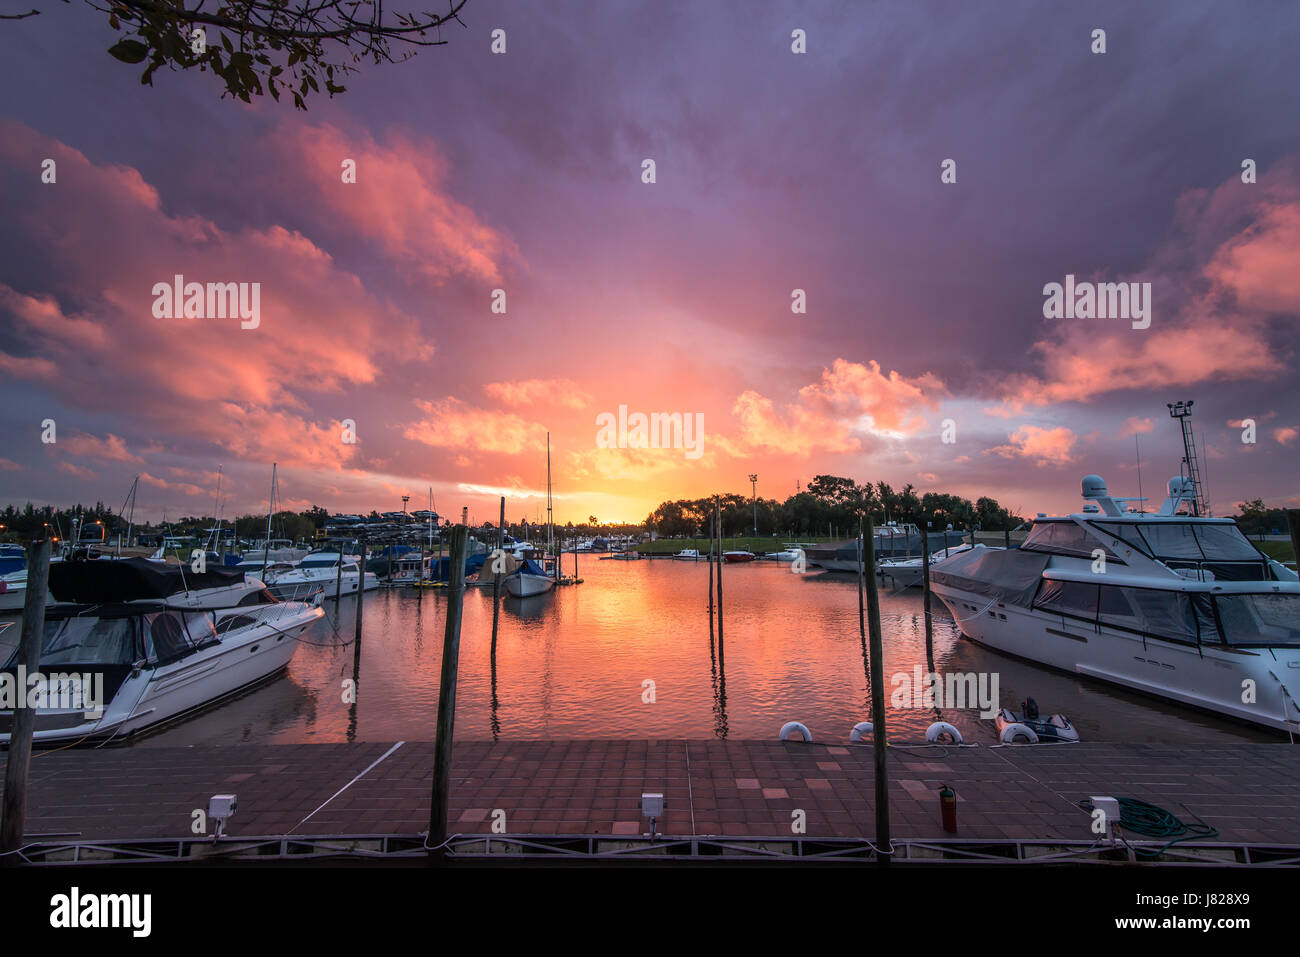 Dopo la tempesta, un bellissimo tramonto al dock. Foto Stock